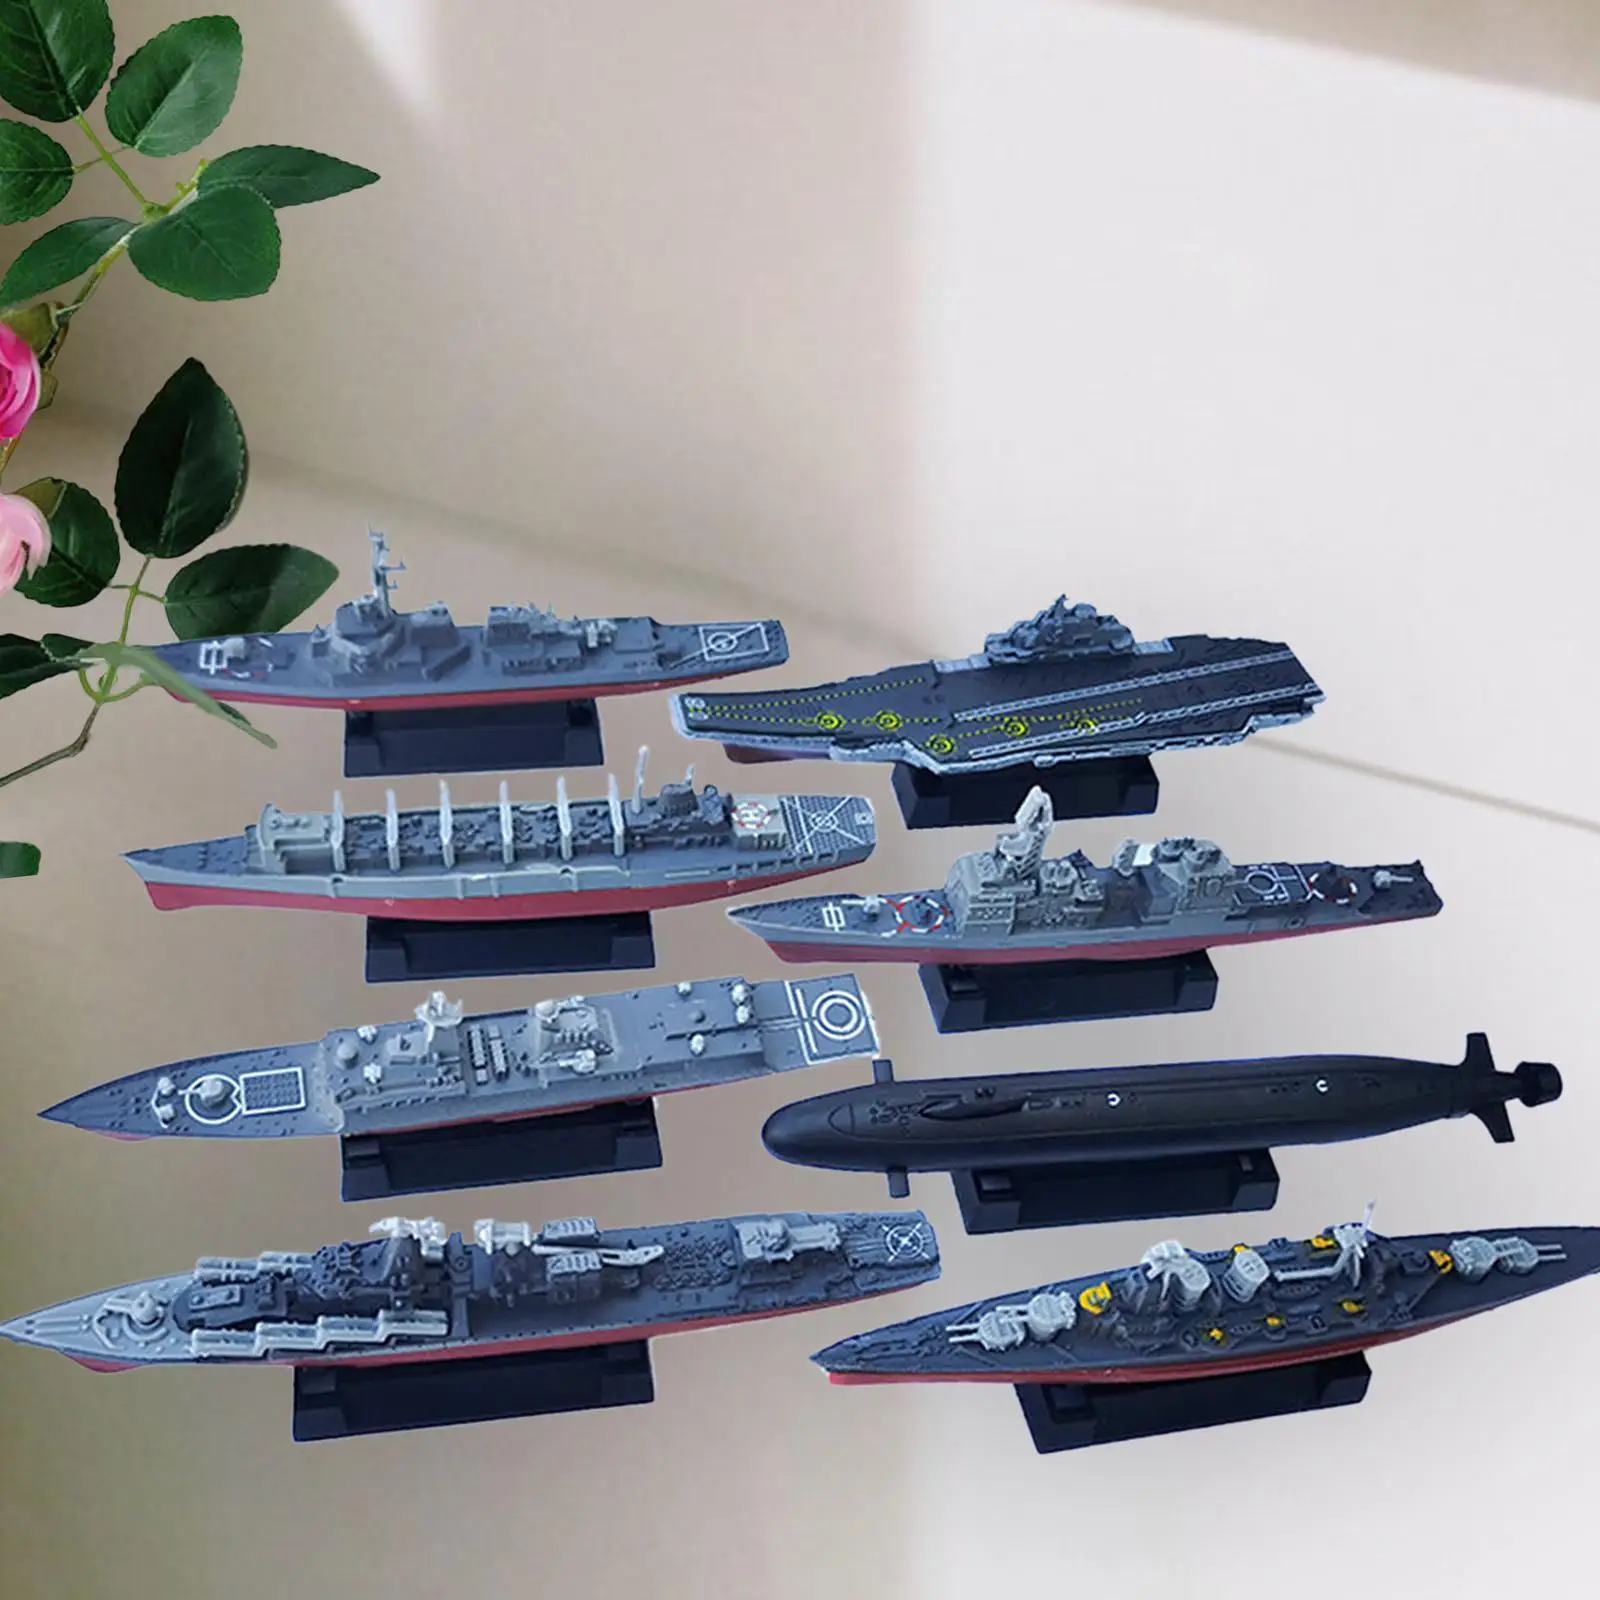 8x Aircraft Model Educational Toys Navy Ship Plastic Model Warships Ship Kits for Girls Kids Adults Boys Birthday Gifts